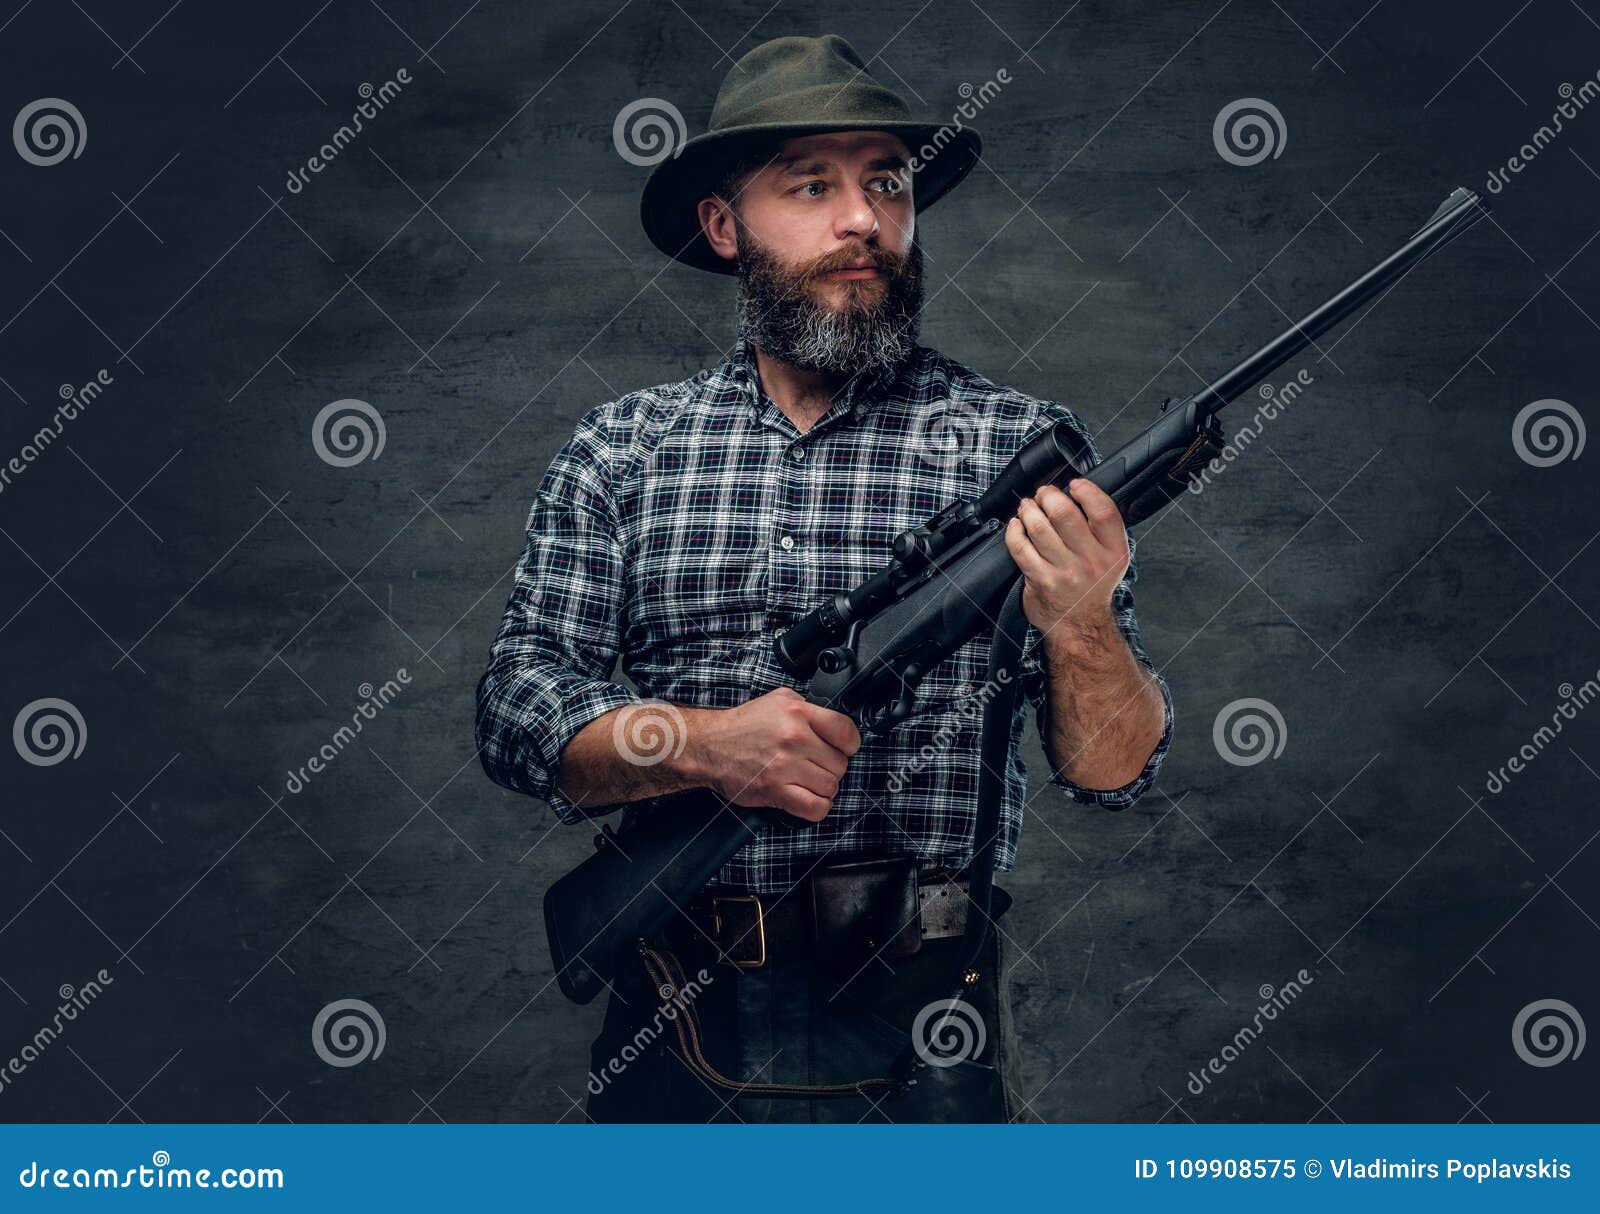 a hunter holds a rifle.